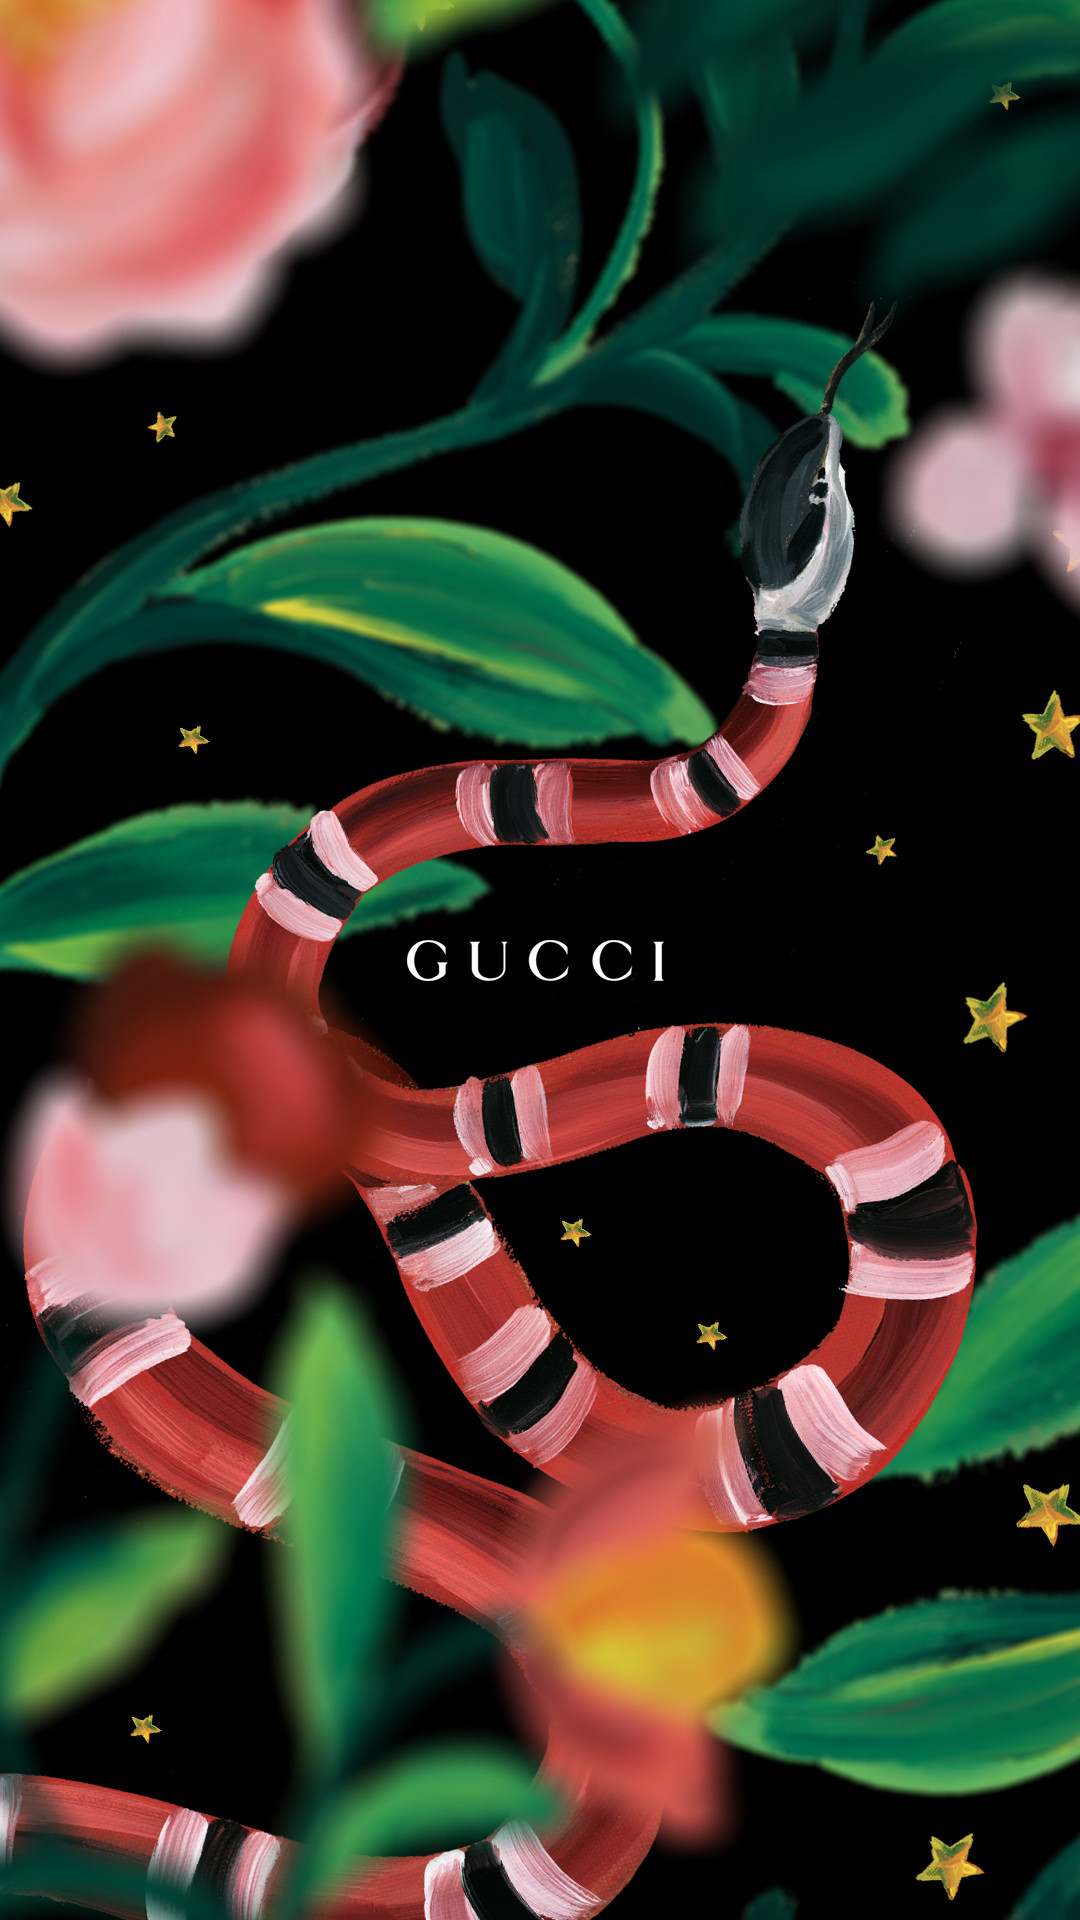 Gucci ヘビ ブランドのiphone壁紙 Iphone Wallpapers